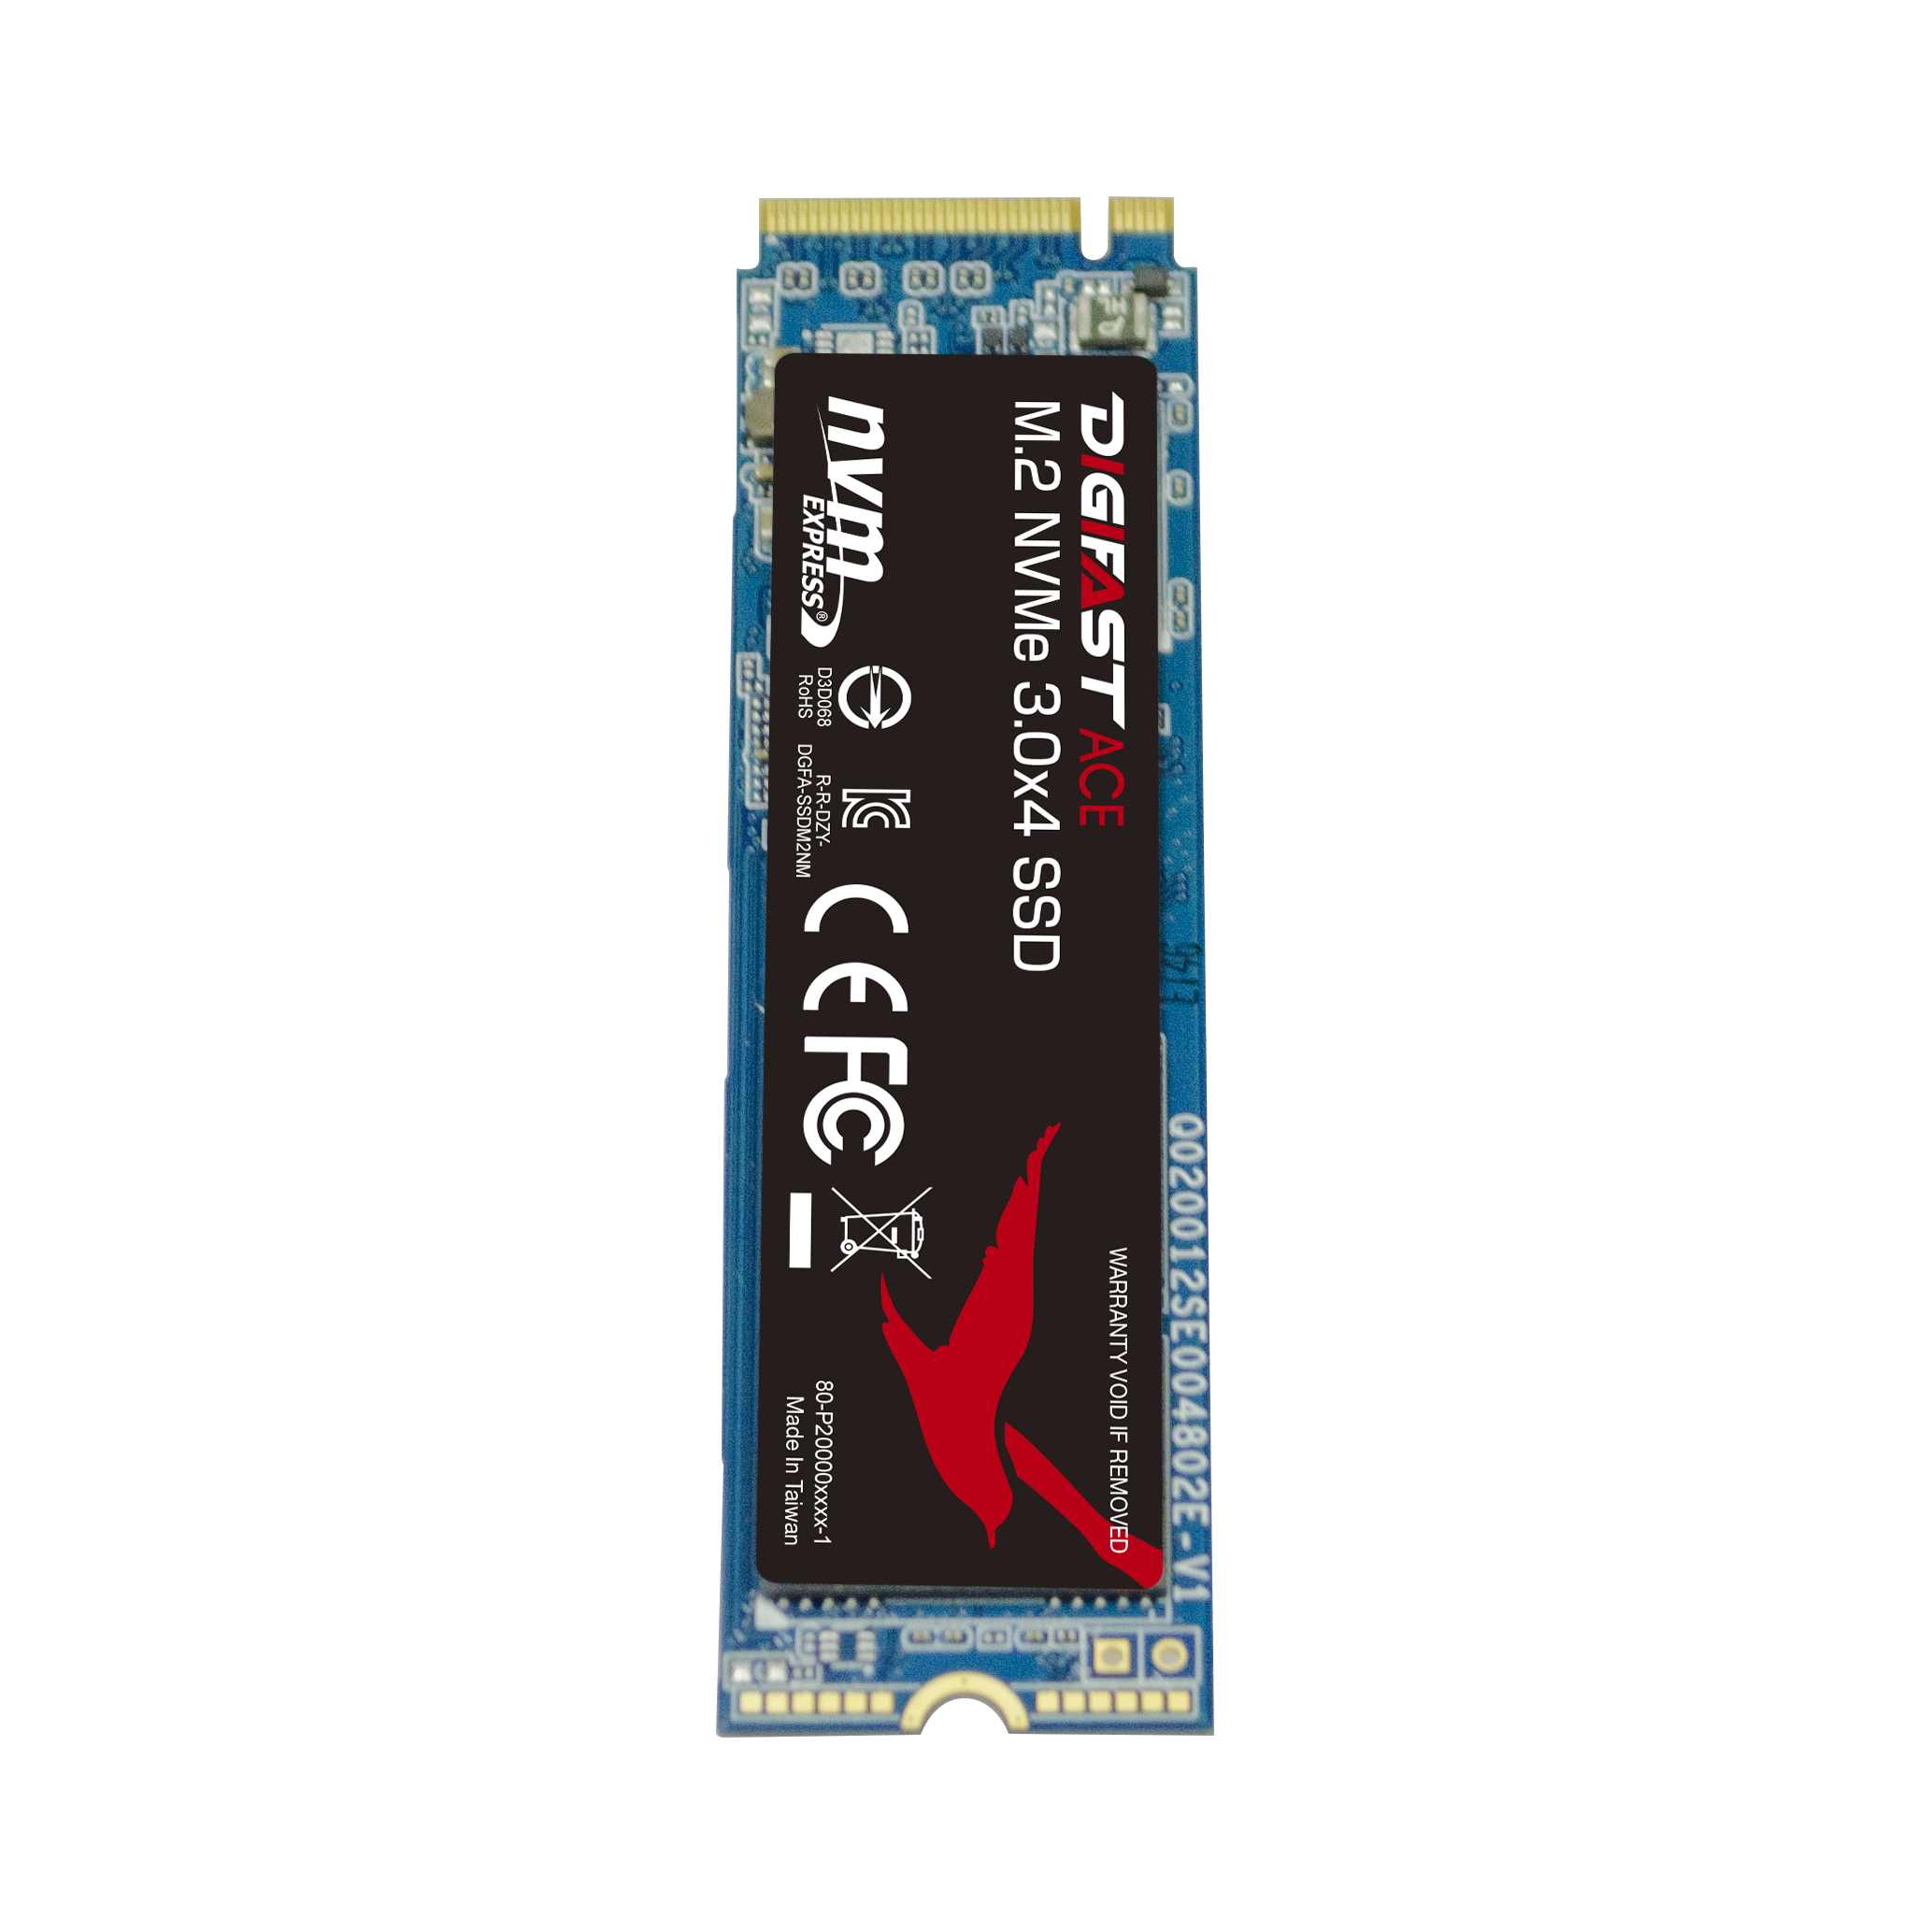 M.2 SSD - Digifast Ace 1TB M.2 NVMe SSD - Gen3x4 PCIe, M.2 2280, Toshiba BiCS3 NAND